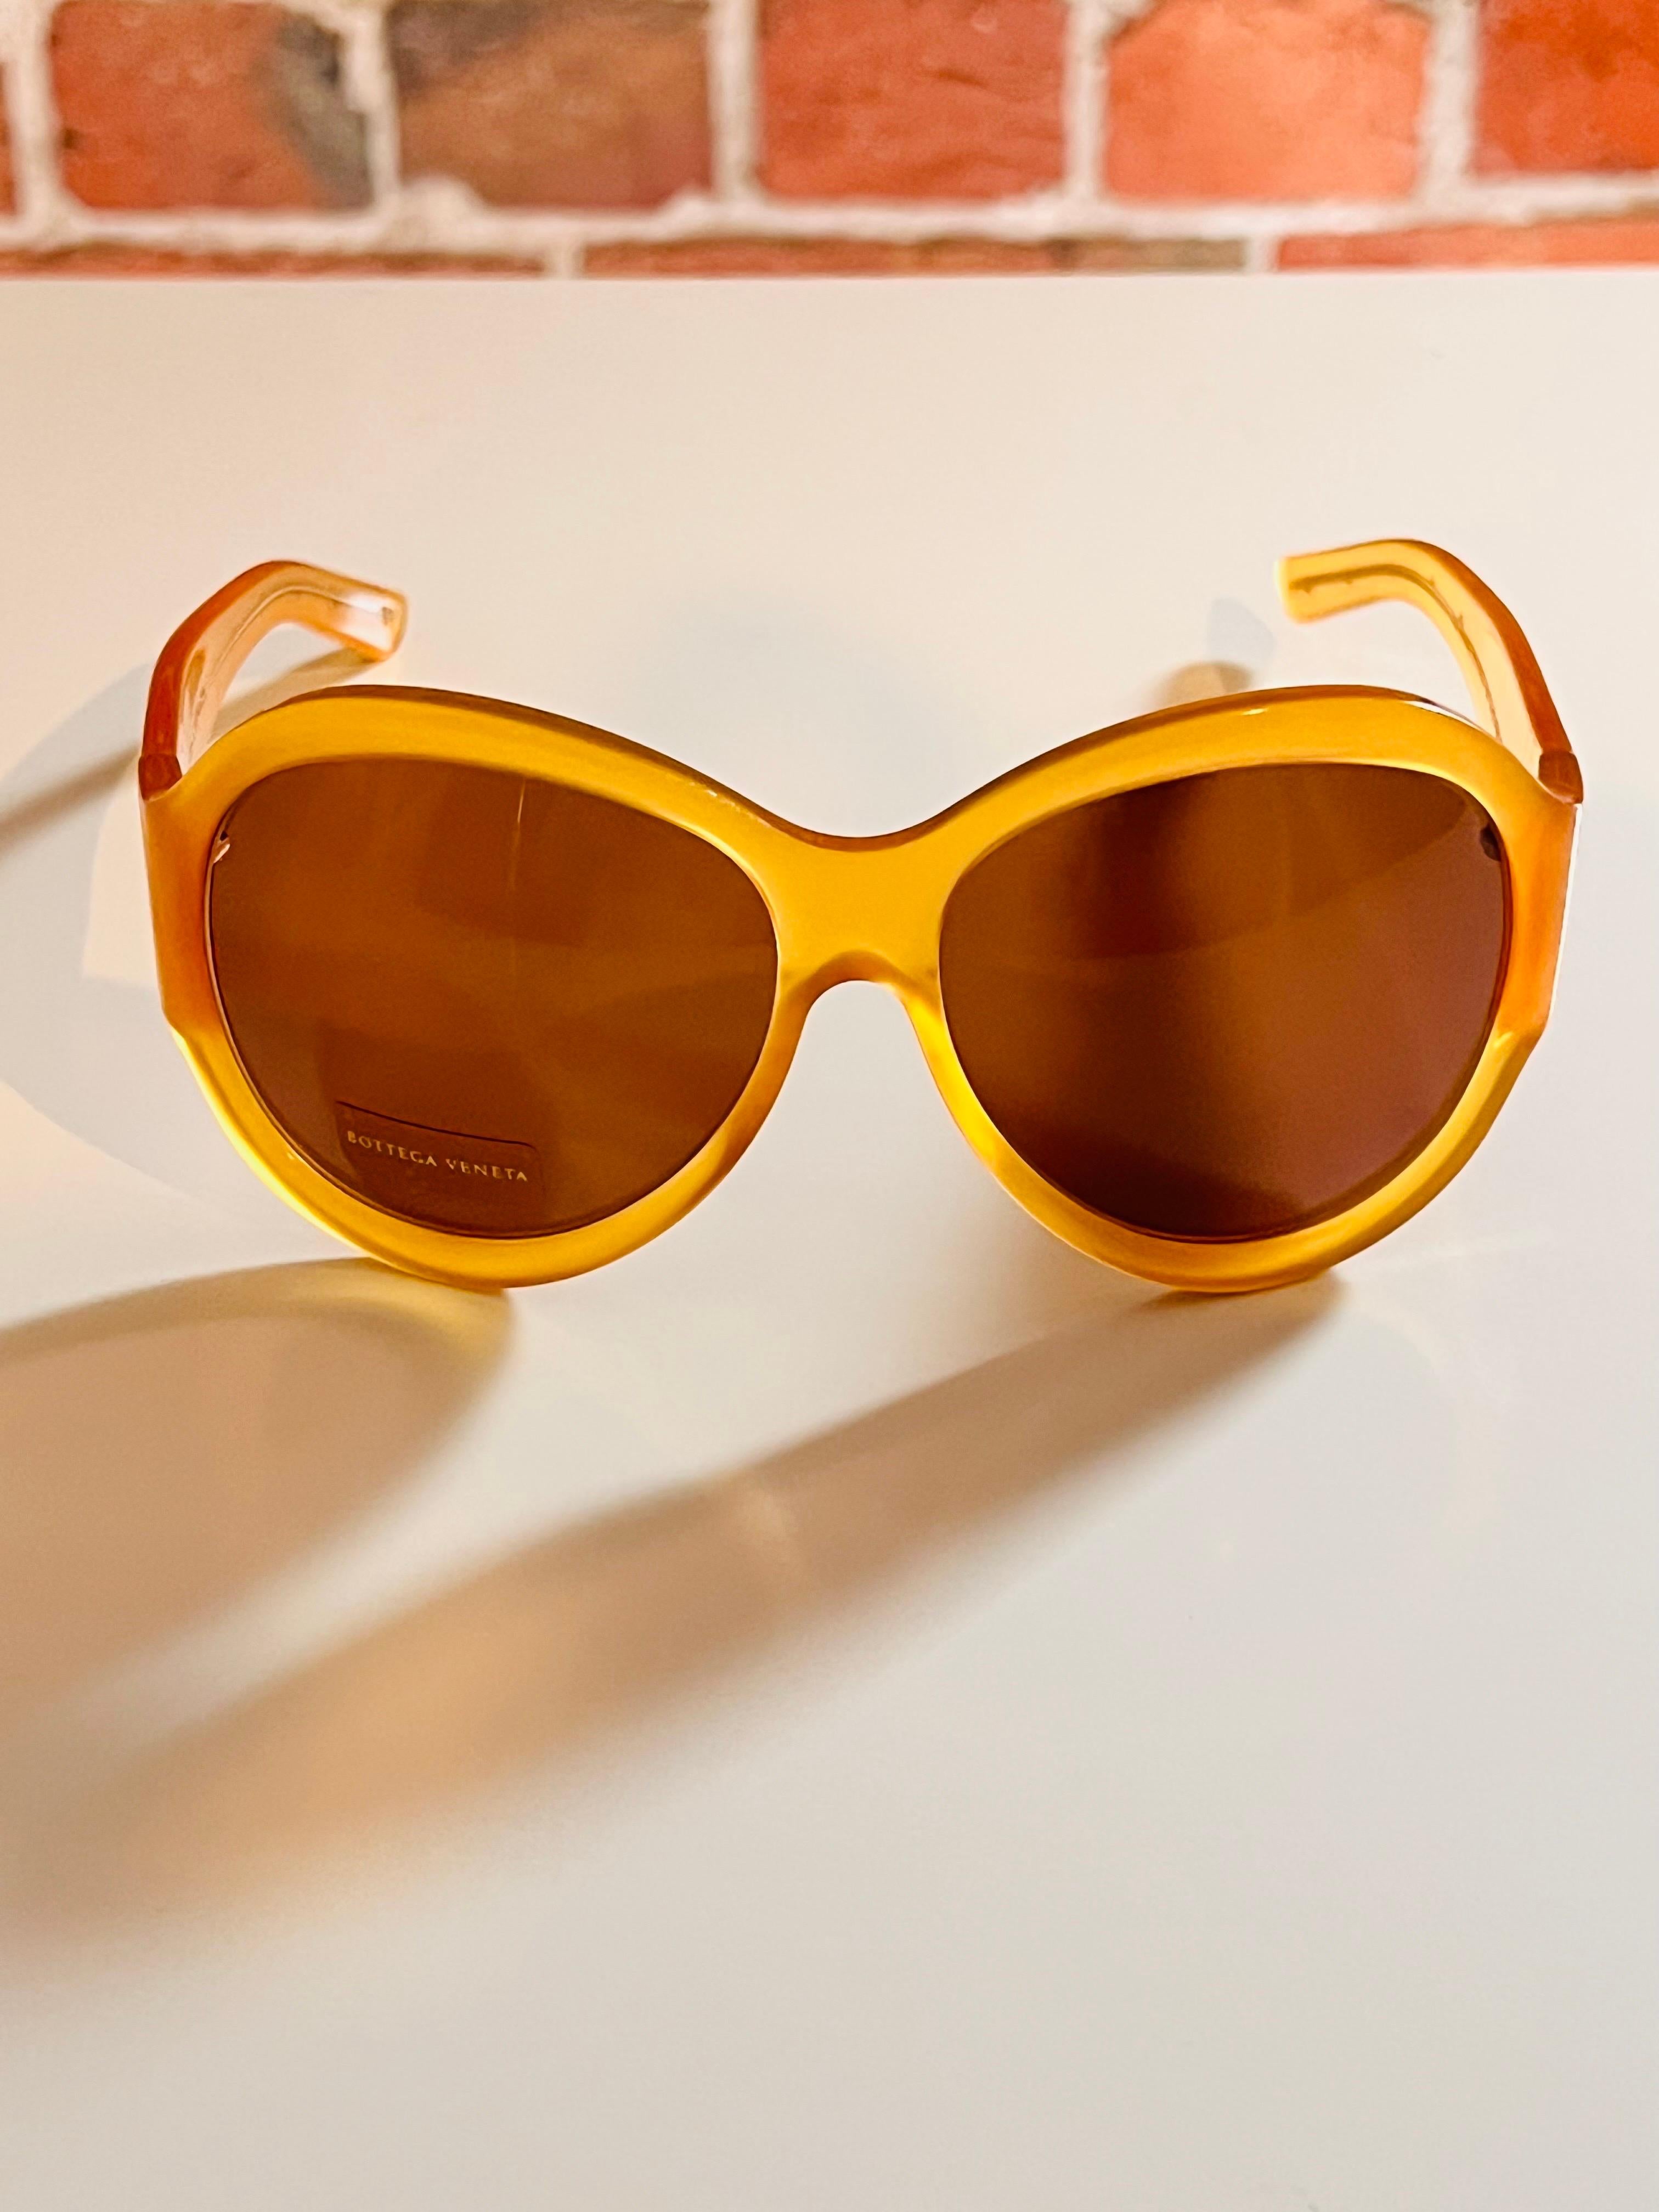 Vintage 1990s Bottega Veneta sunglasses in honey colour with butterfly detail For Sale 9